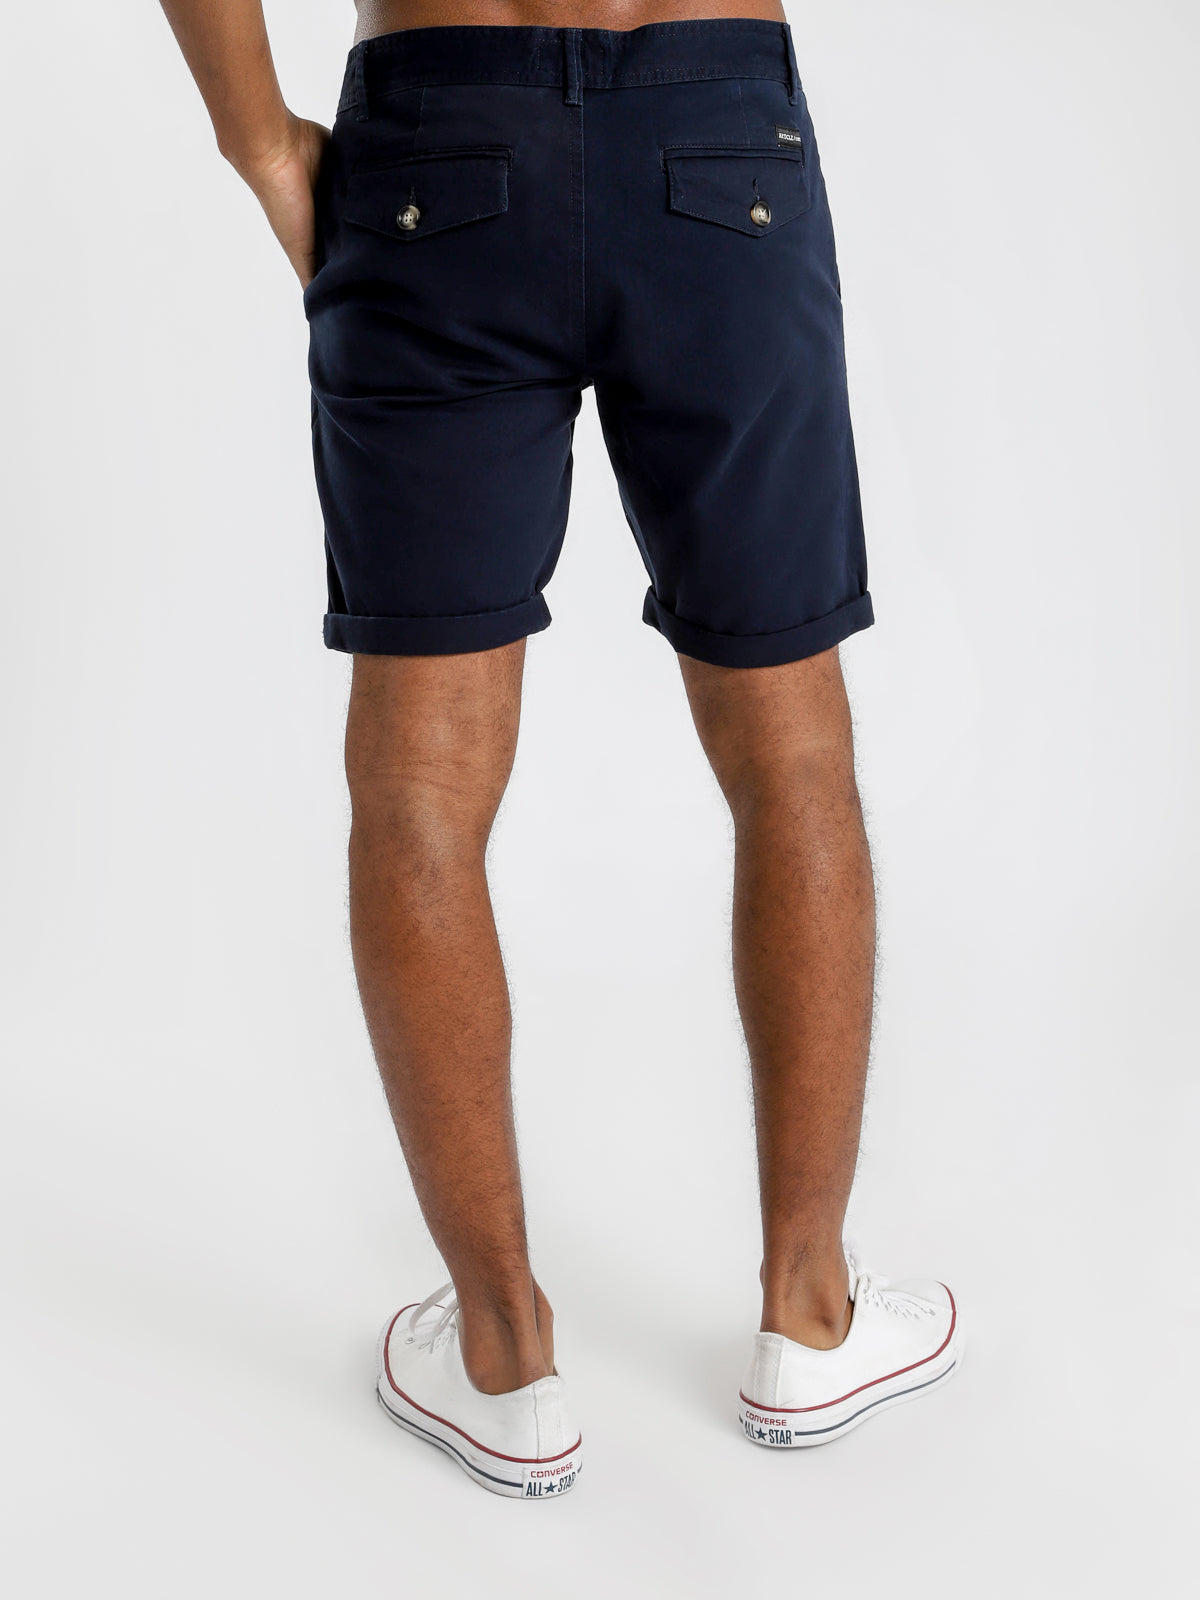 Cooper Chino Shorts in Navy